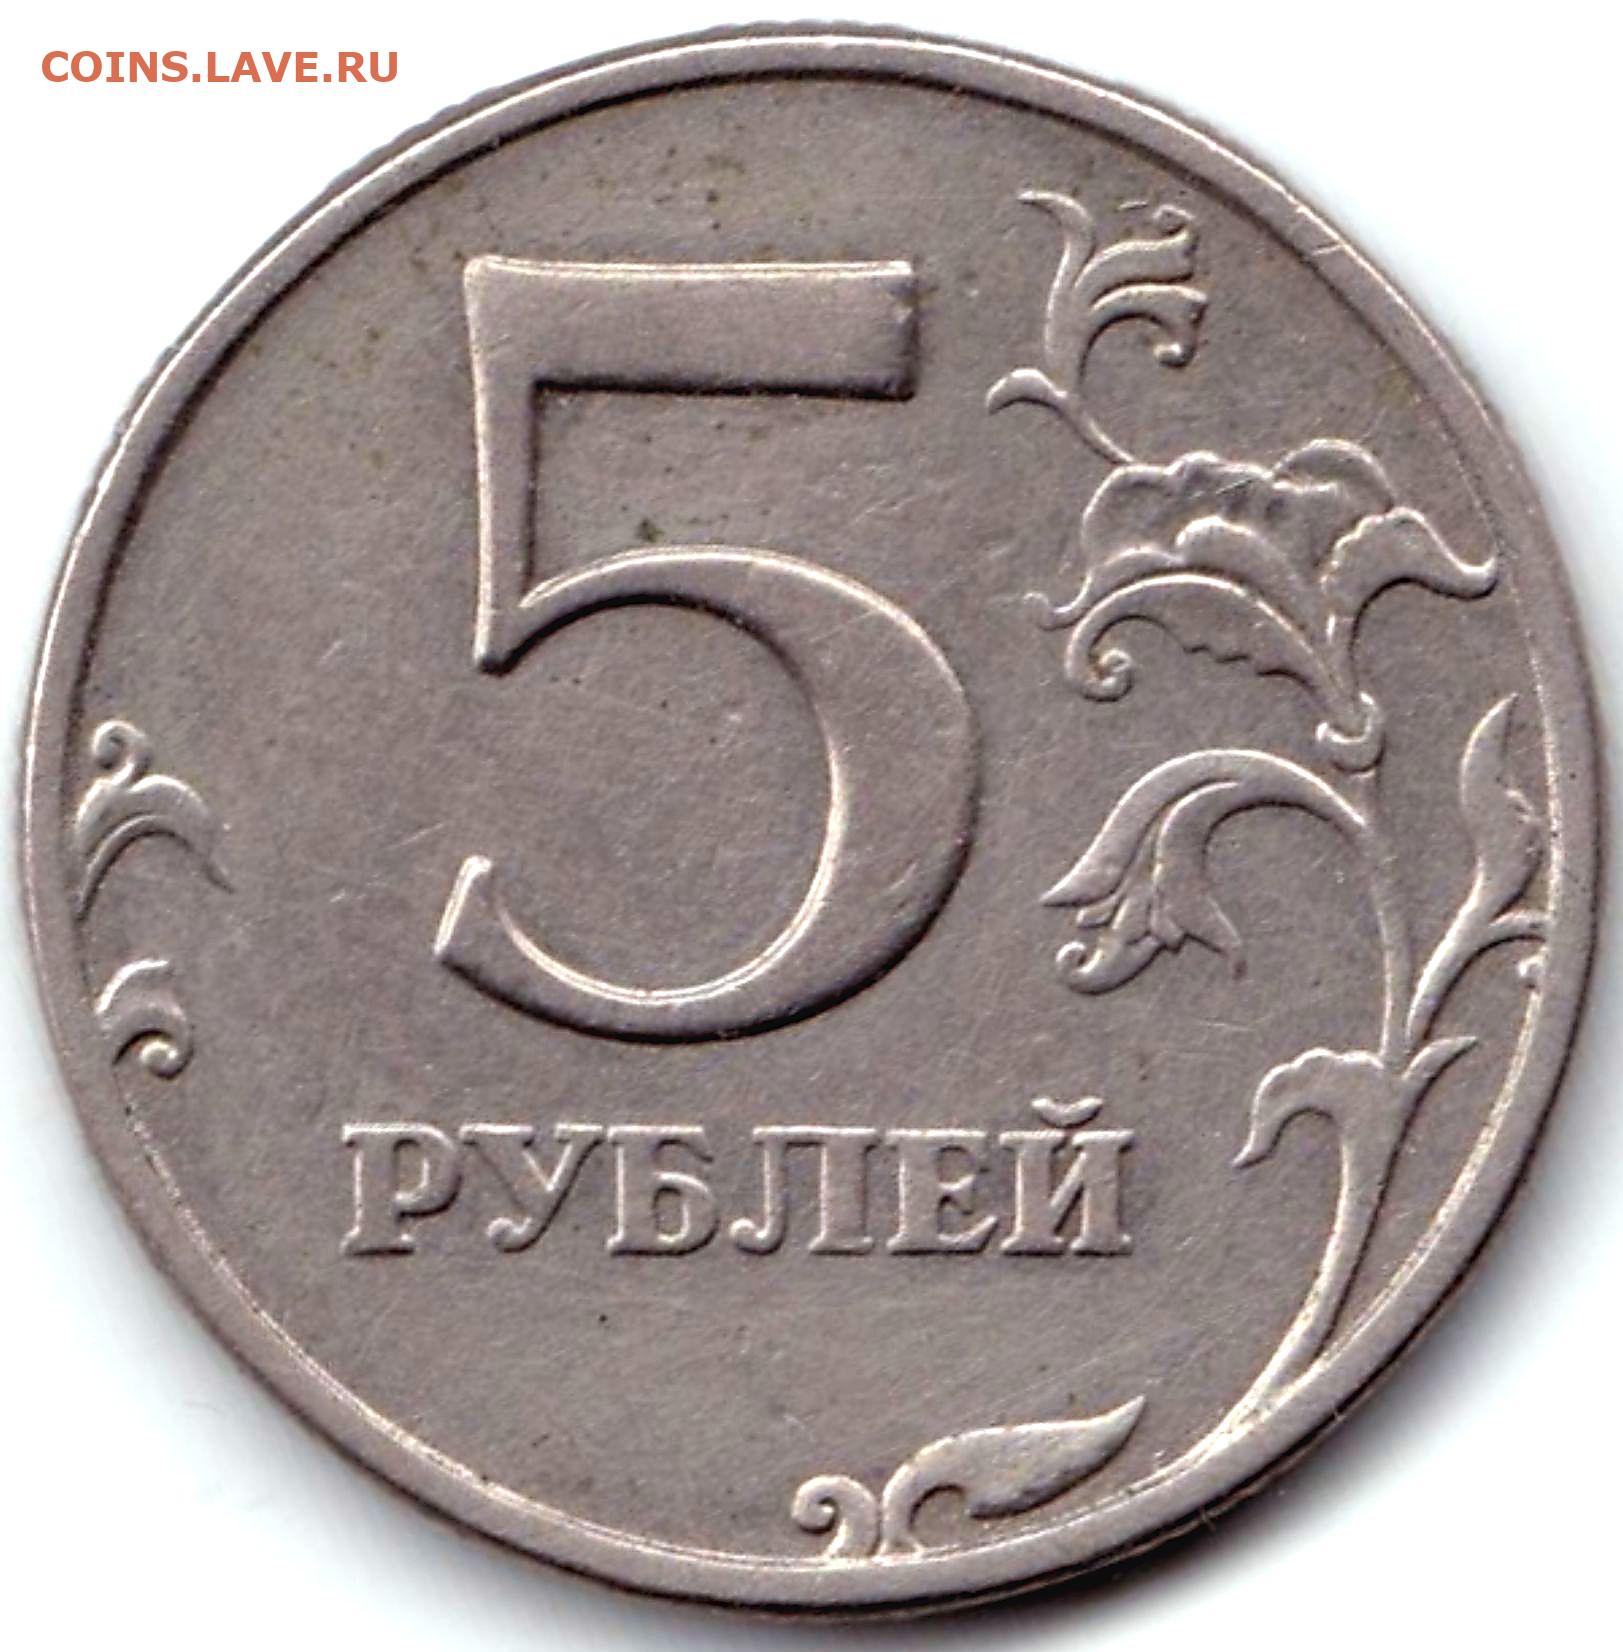 Количество монеты 5 рублей. 5 Рублей 2015 ММД. 5 Рублей 1997 ММД брак штампа Канта. Монета 5 рублей. Монетка 5 рублей.